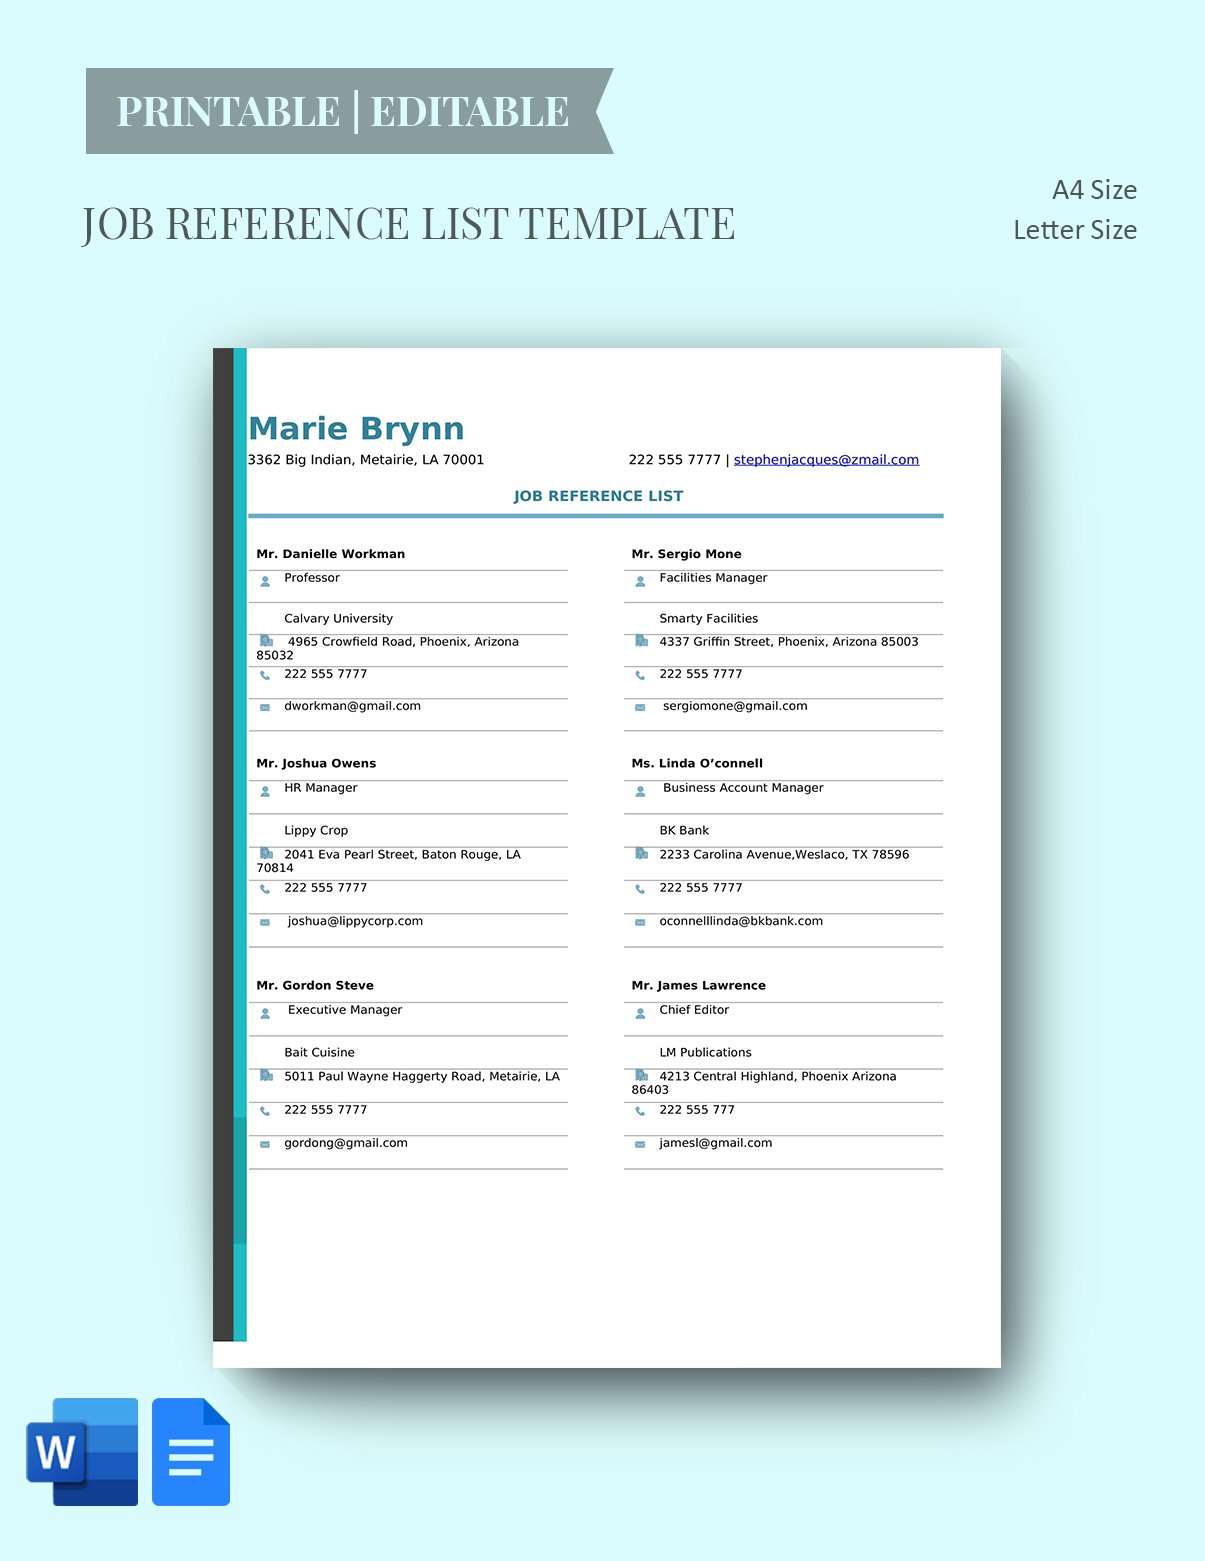 Job Reference List Template